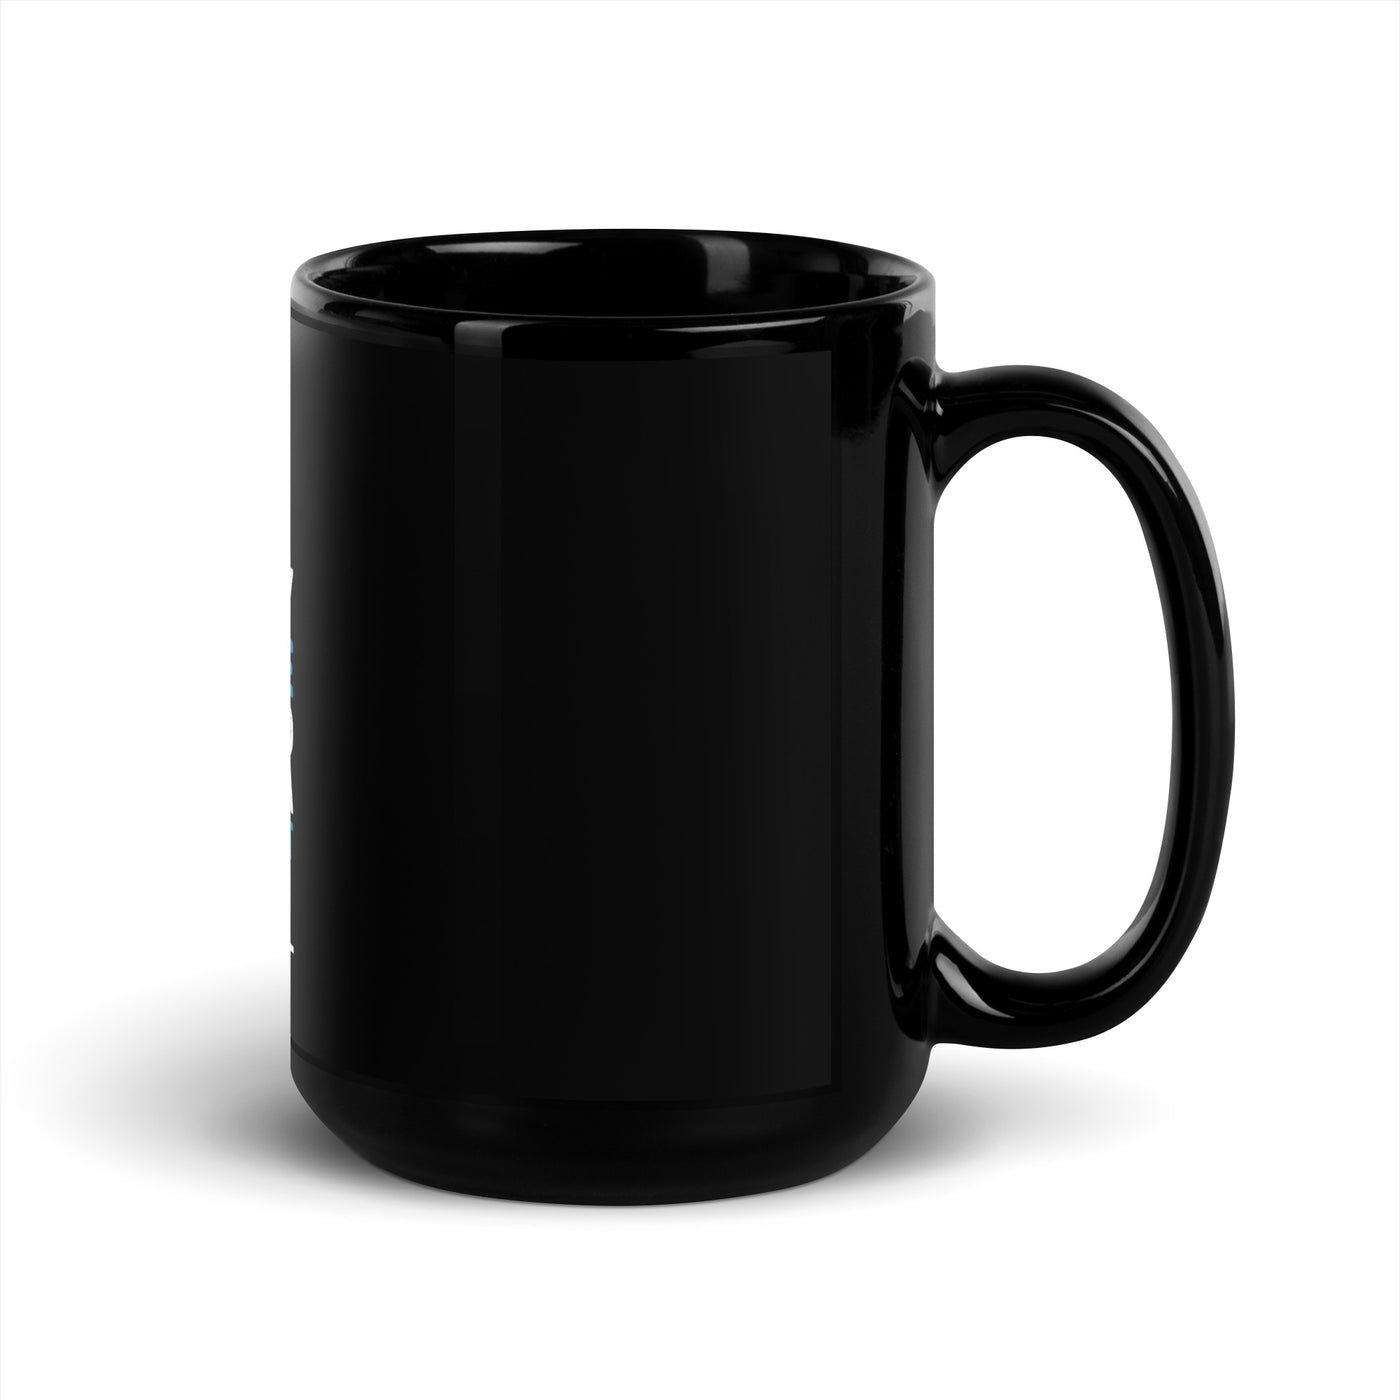 Sorry! I am late, I have to get to a Save Point - Black Glossy Mug